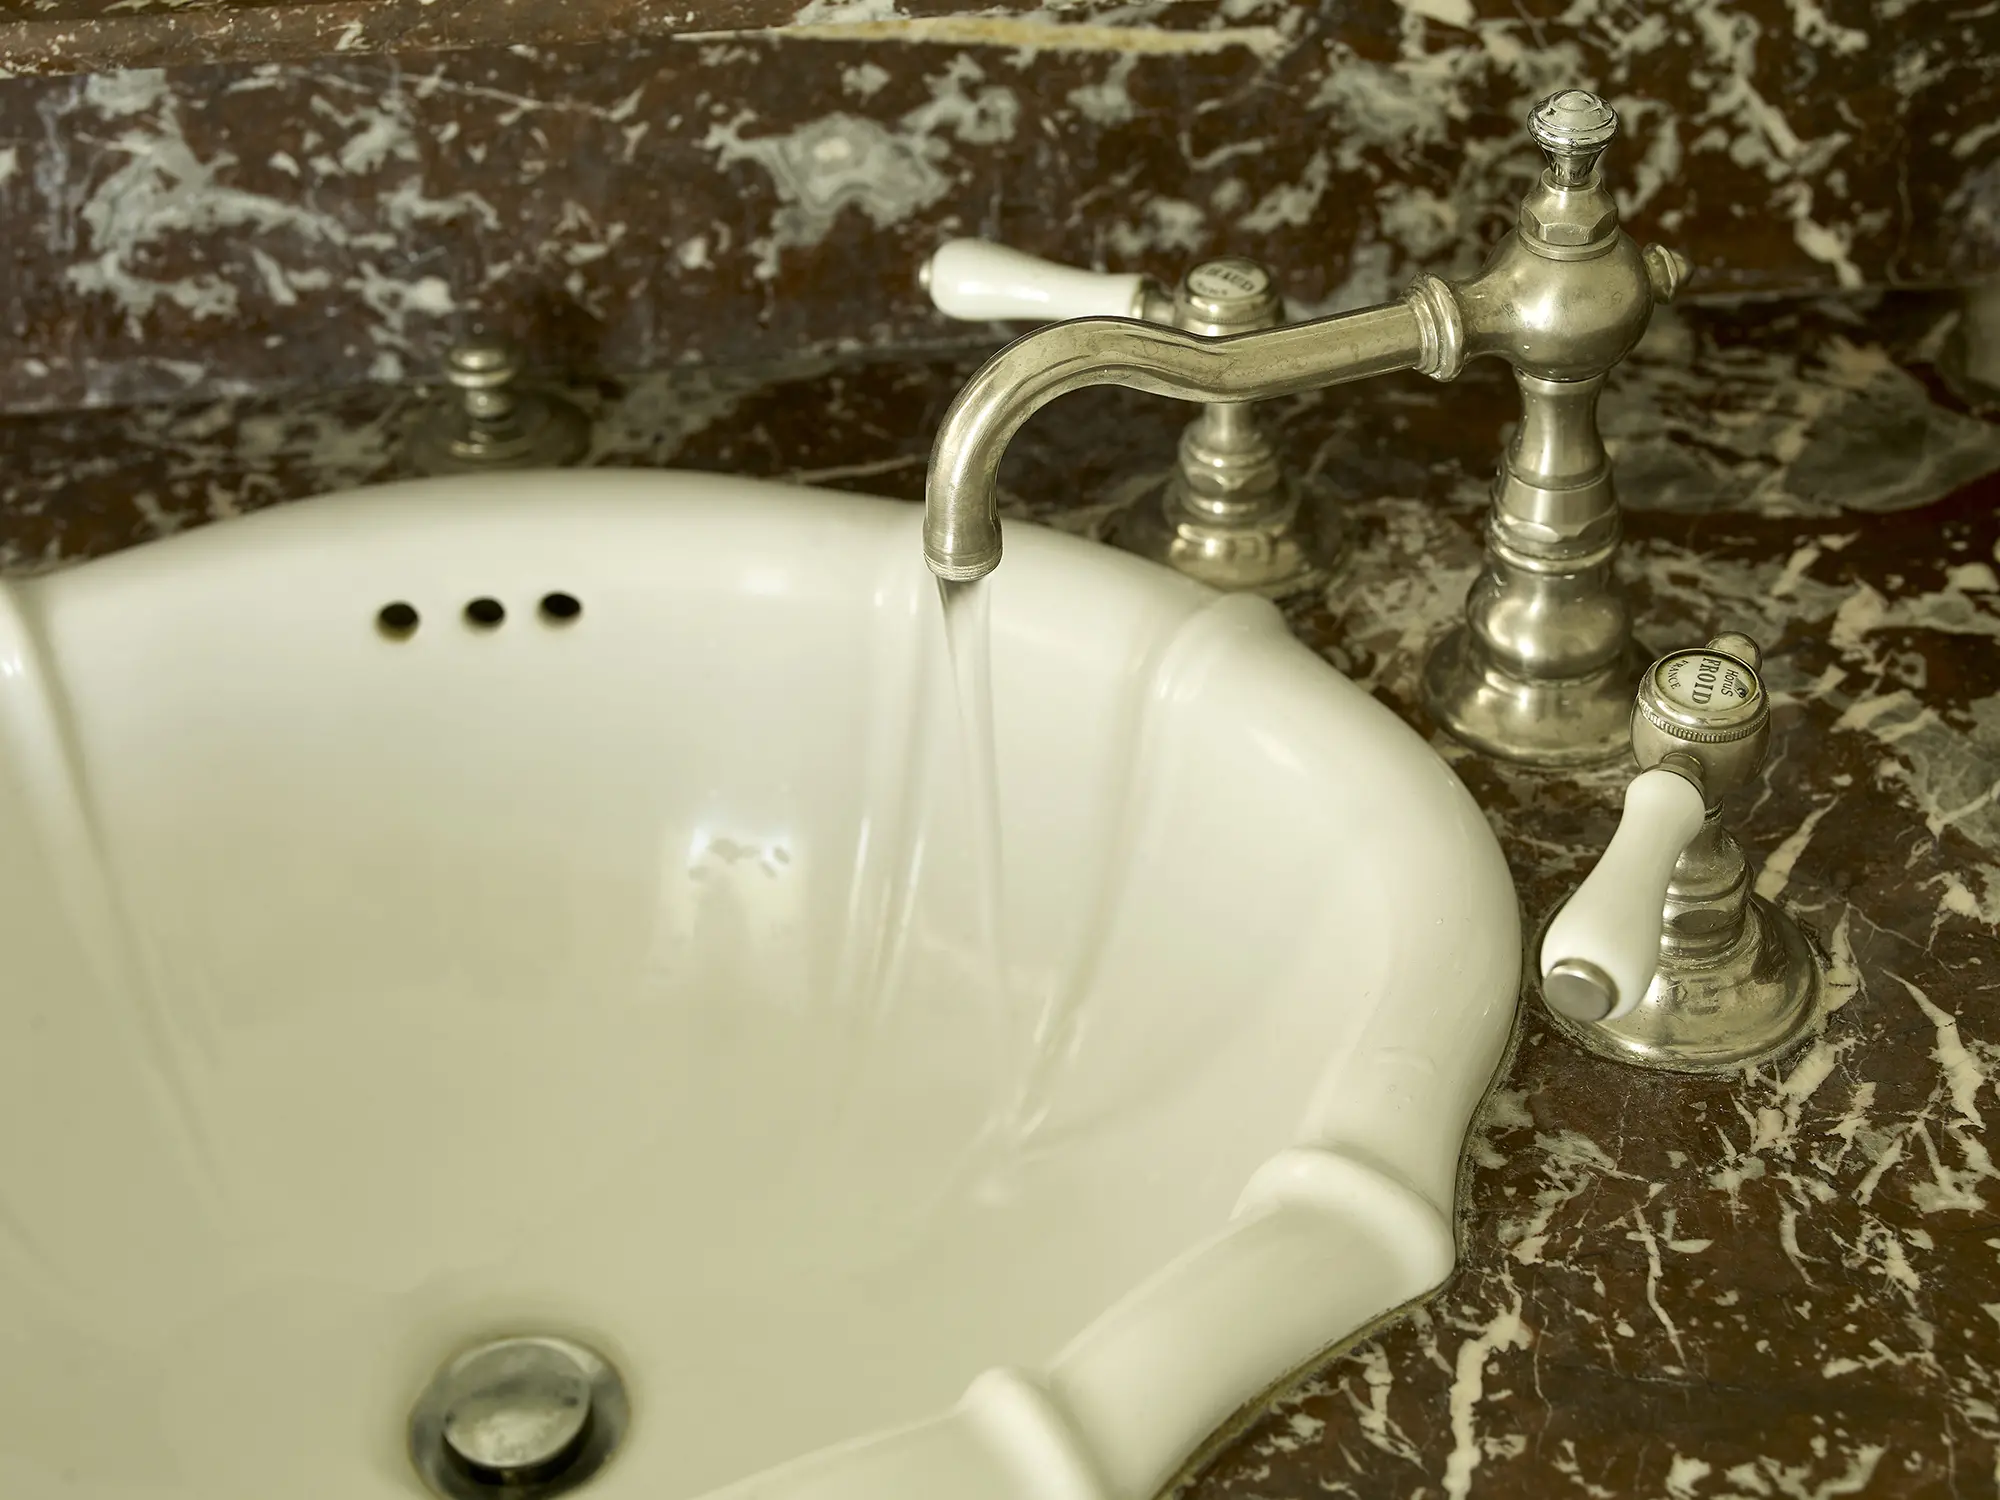 Detail of vintage porcelain sink and silver faucet